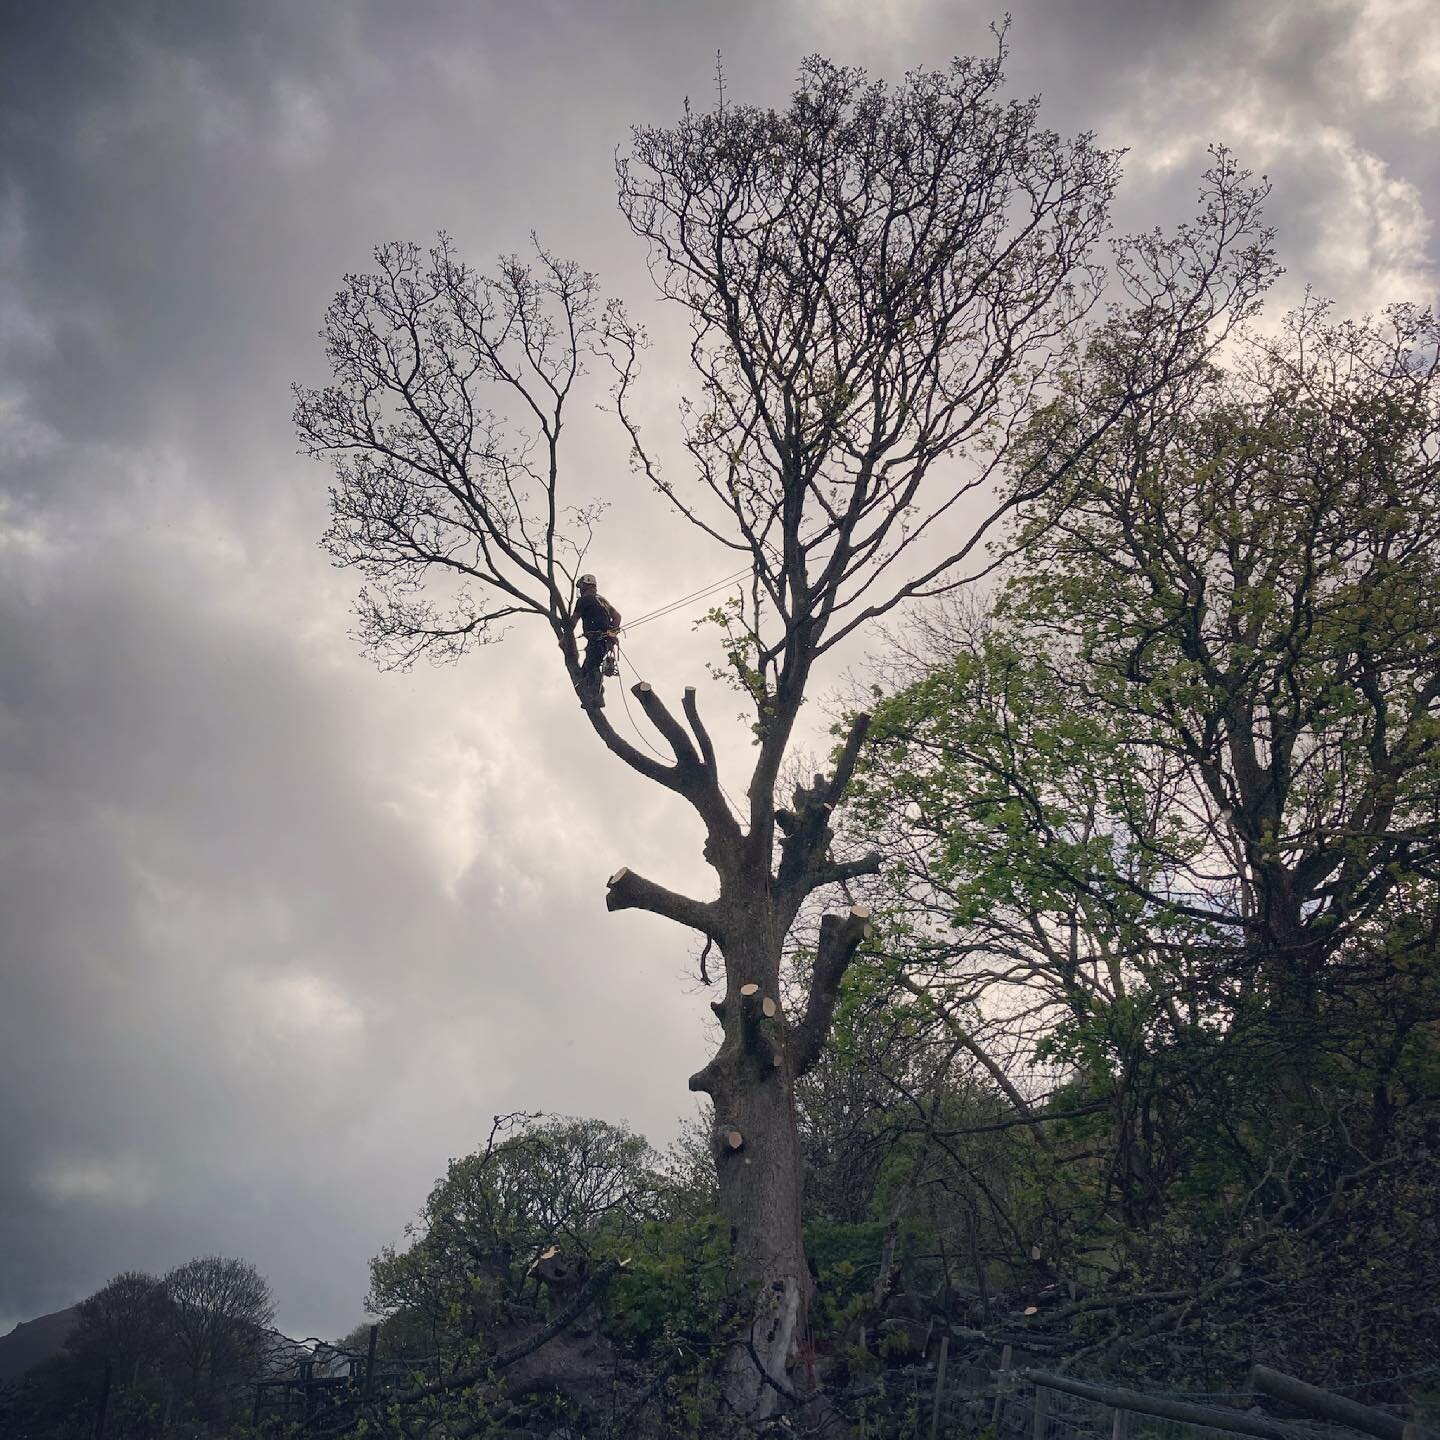 Tywydd Cymraeg go iawn heddiw.
Proper Welsh weather today.
#mwtreesurgery #treesurgery #arborist #tree #bigtree #gogleddcymru #northwales